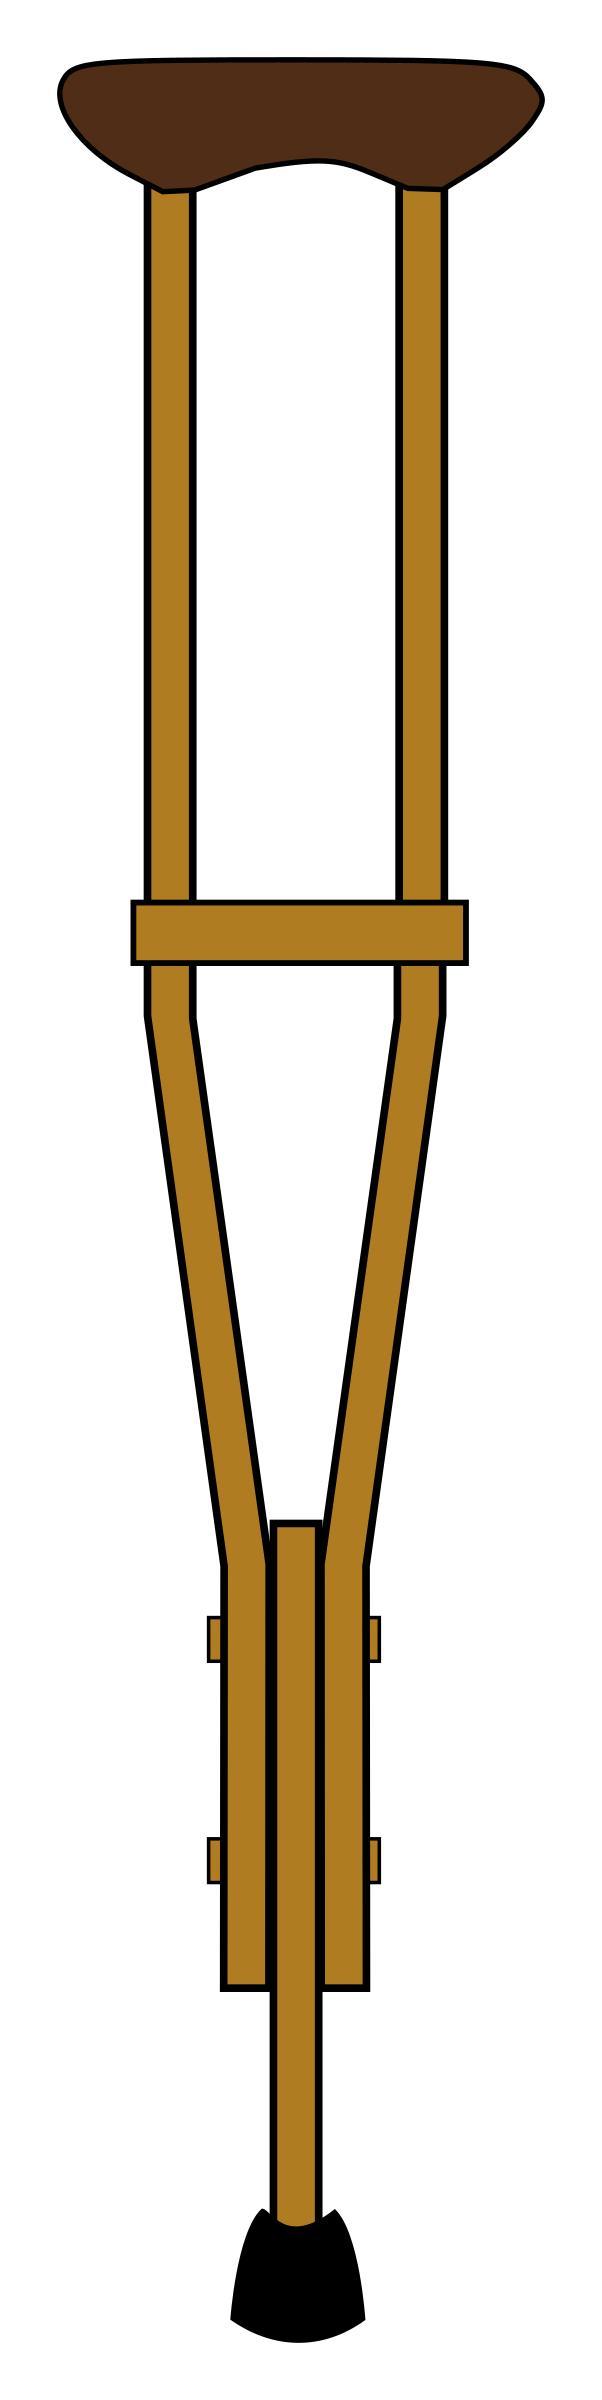 Wooden crutch png transparent